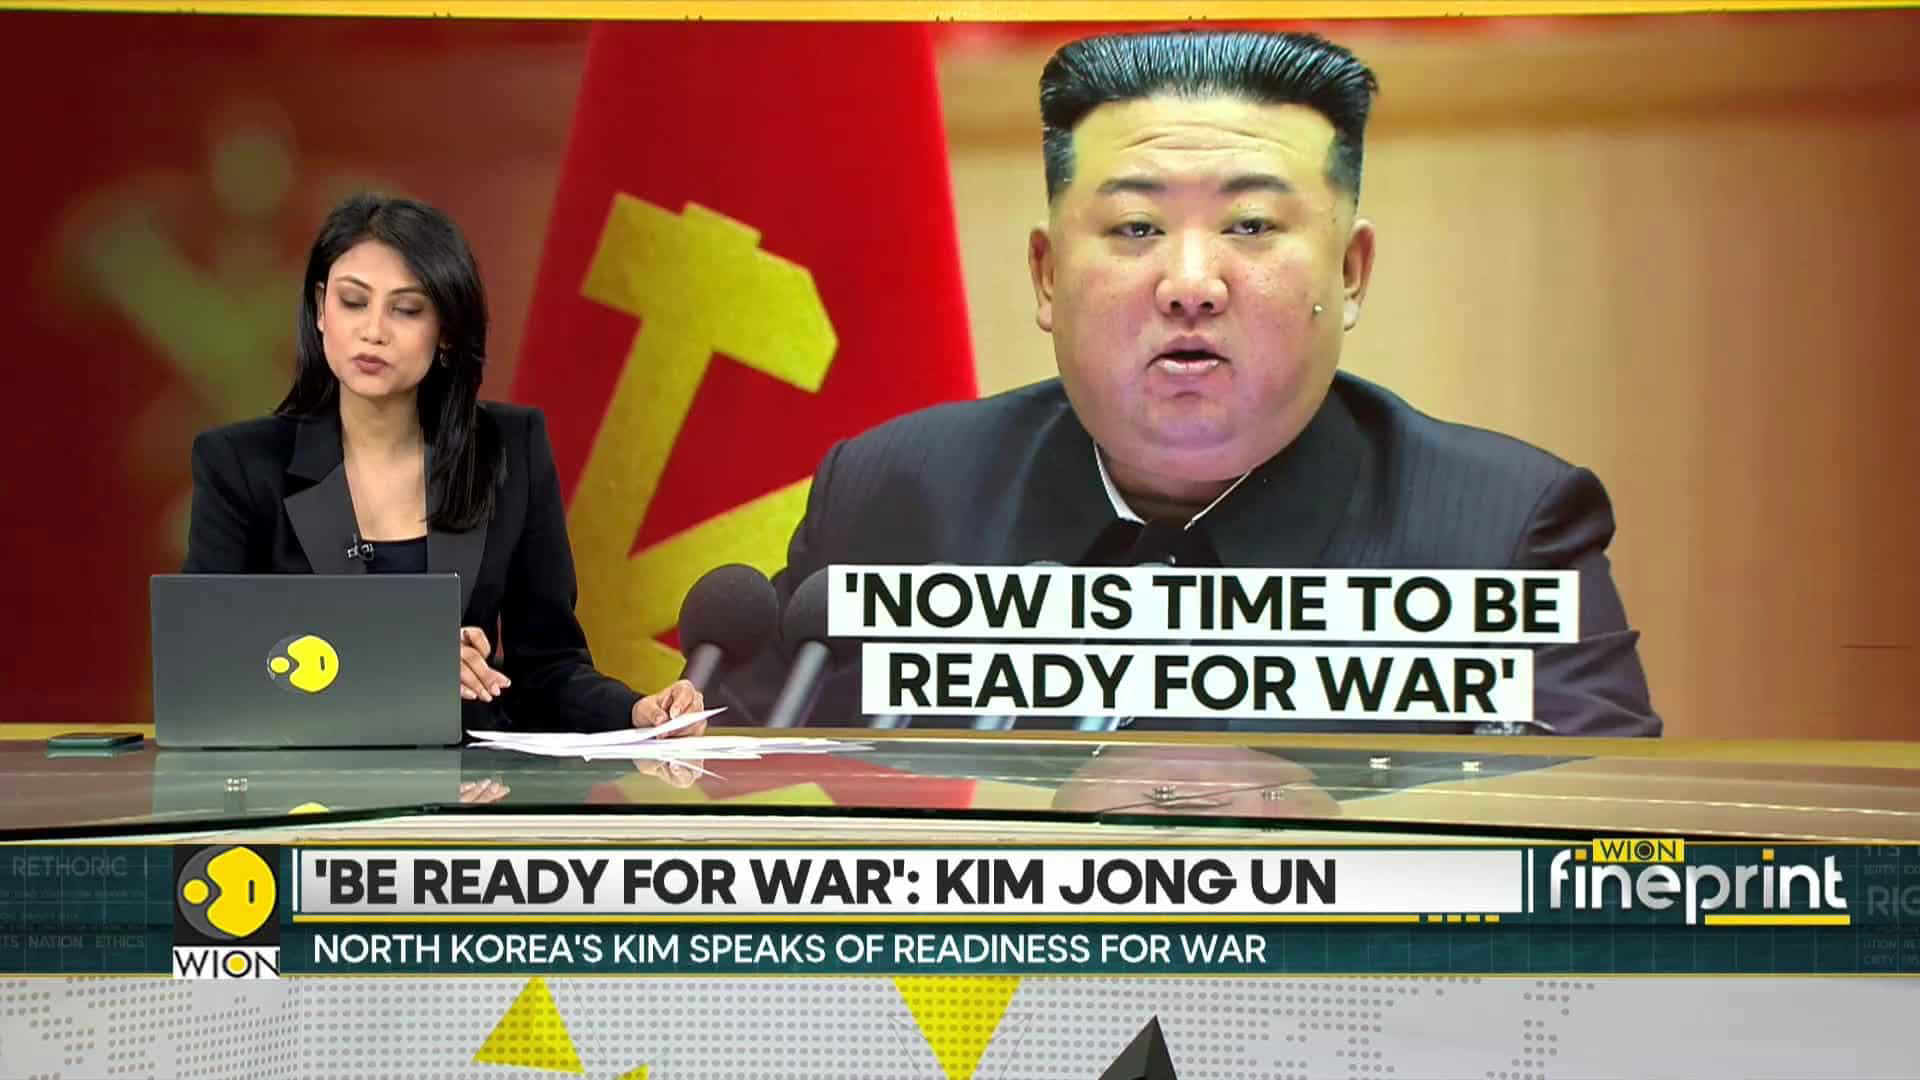 North Korea's Kim speaks of readiness for war